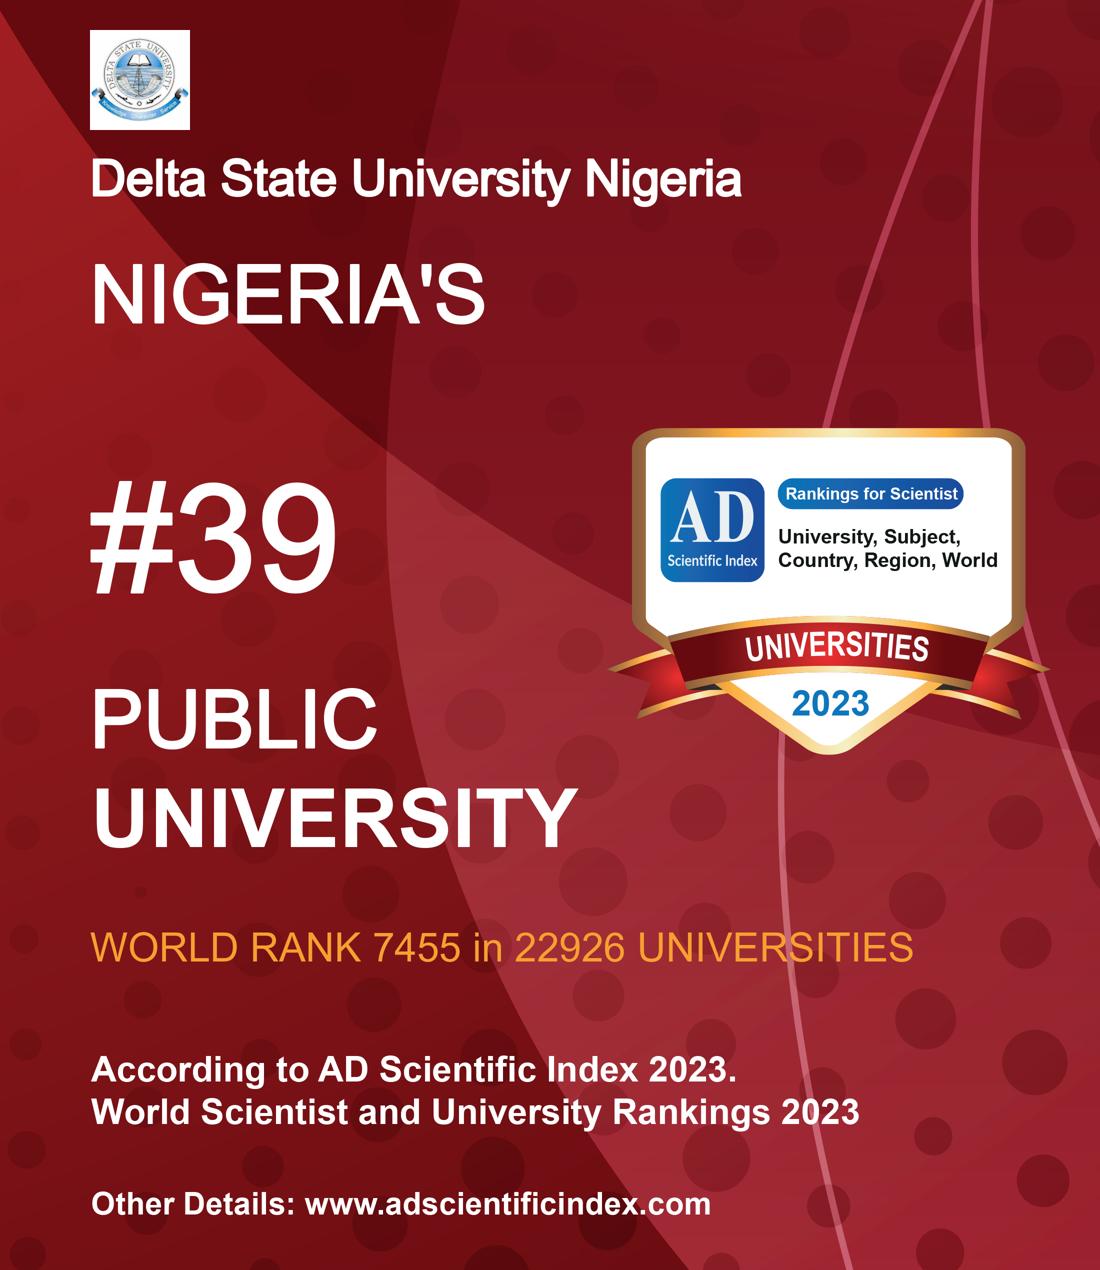 Delta State University Nigeria